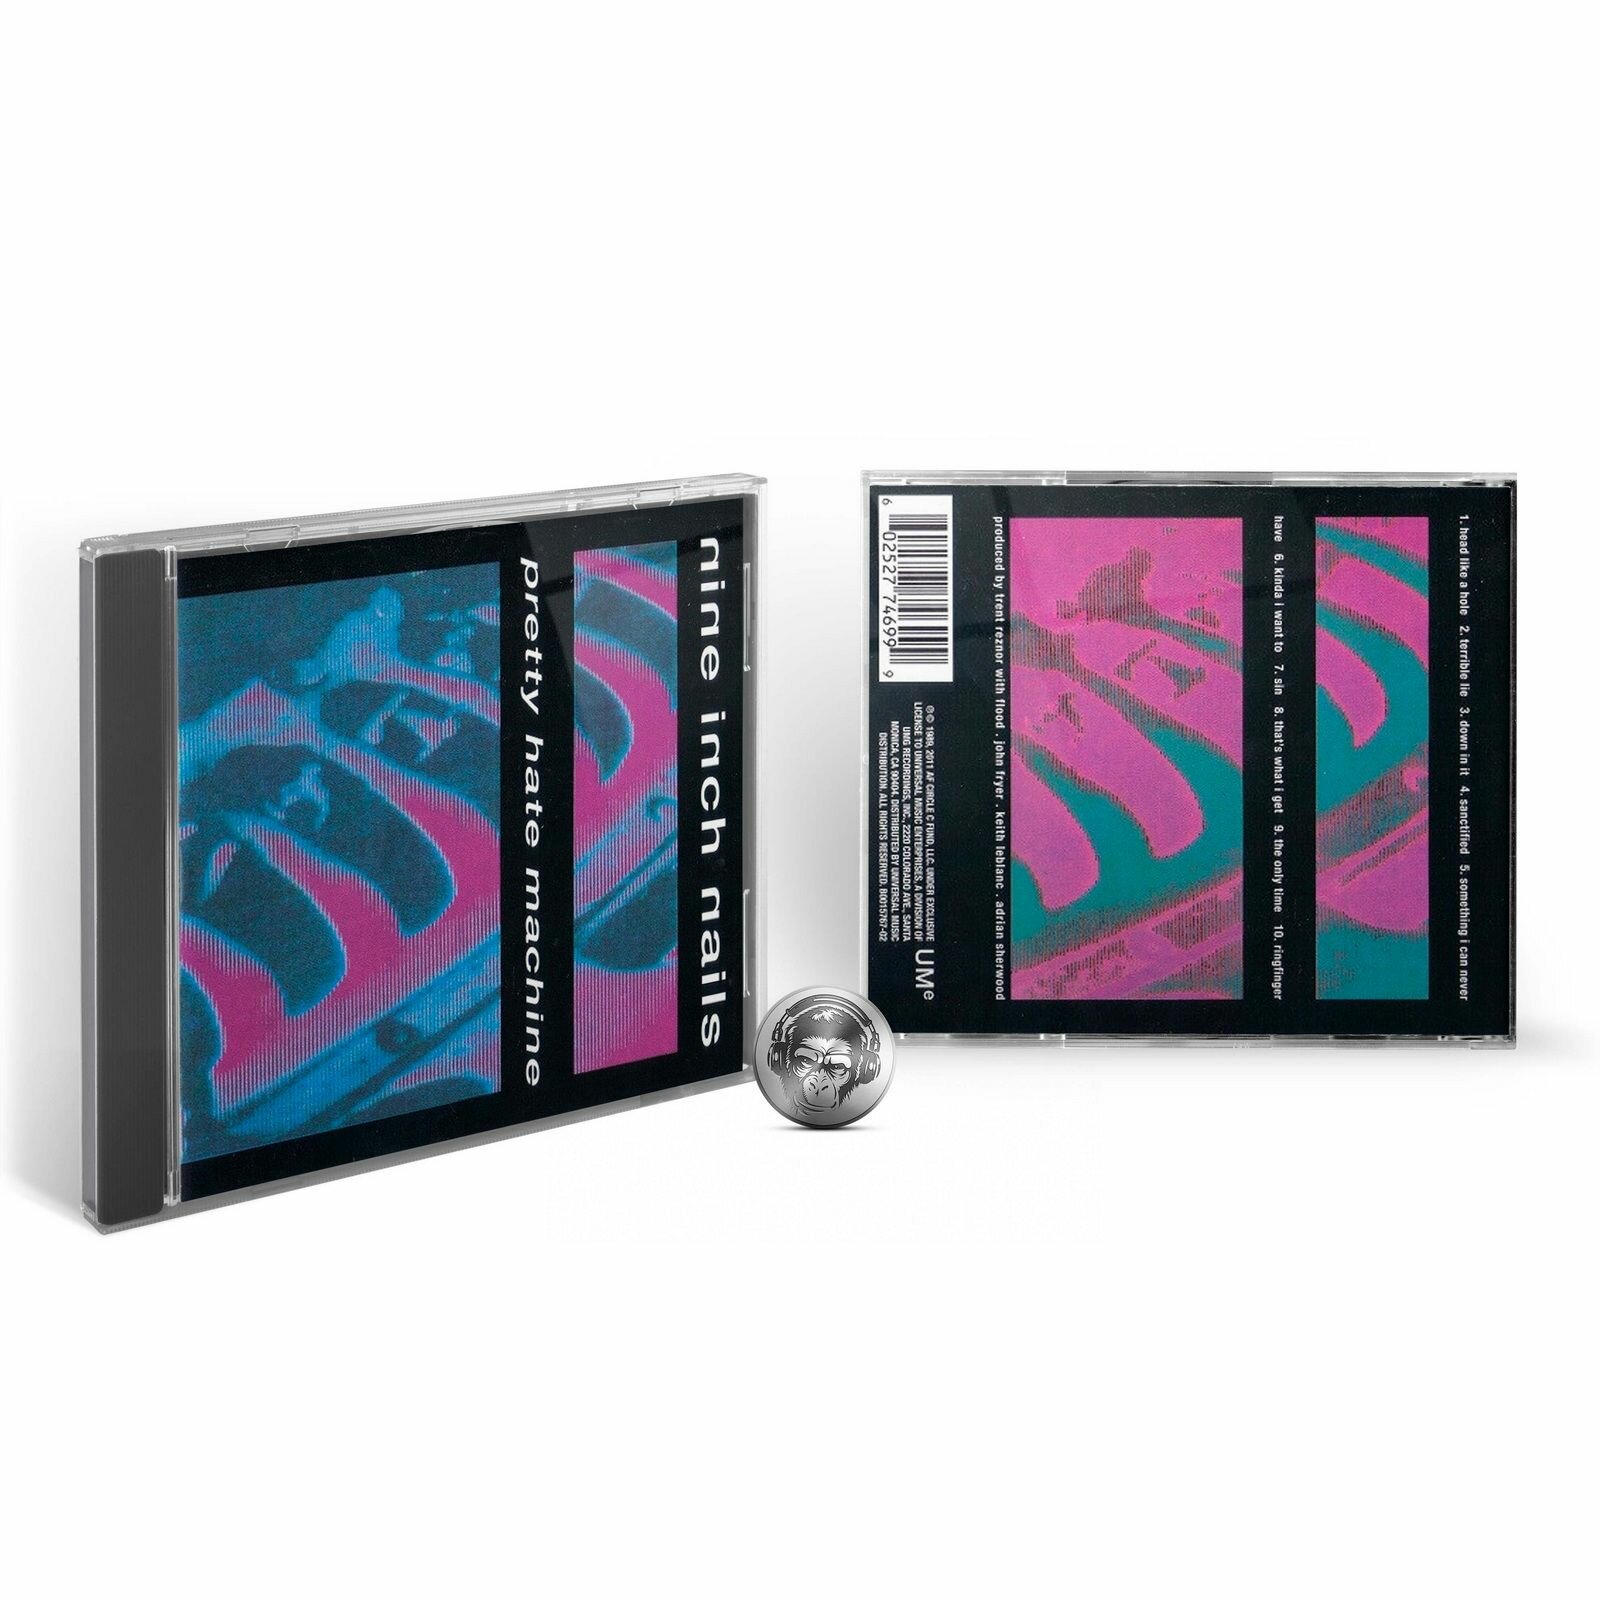 Nine Inch Nails - Pretty Hate Machine (1CD) 2011 Universal, Jewel Аудио диск